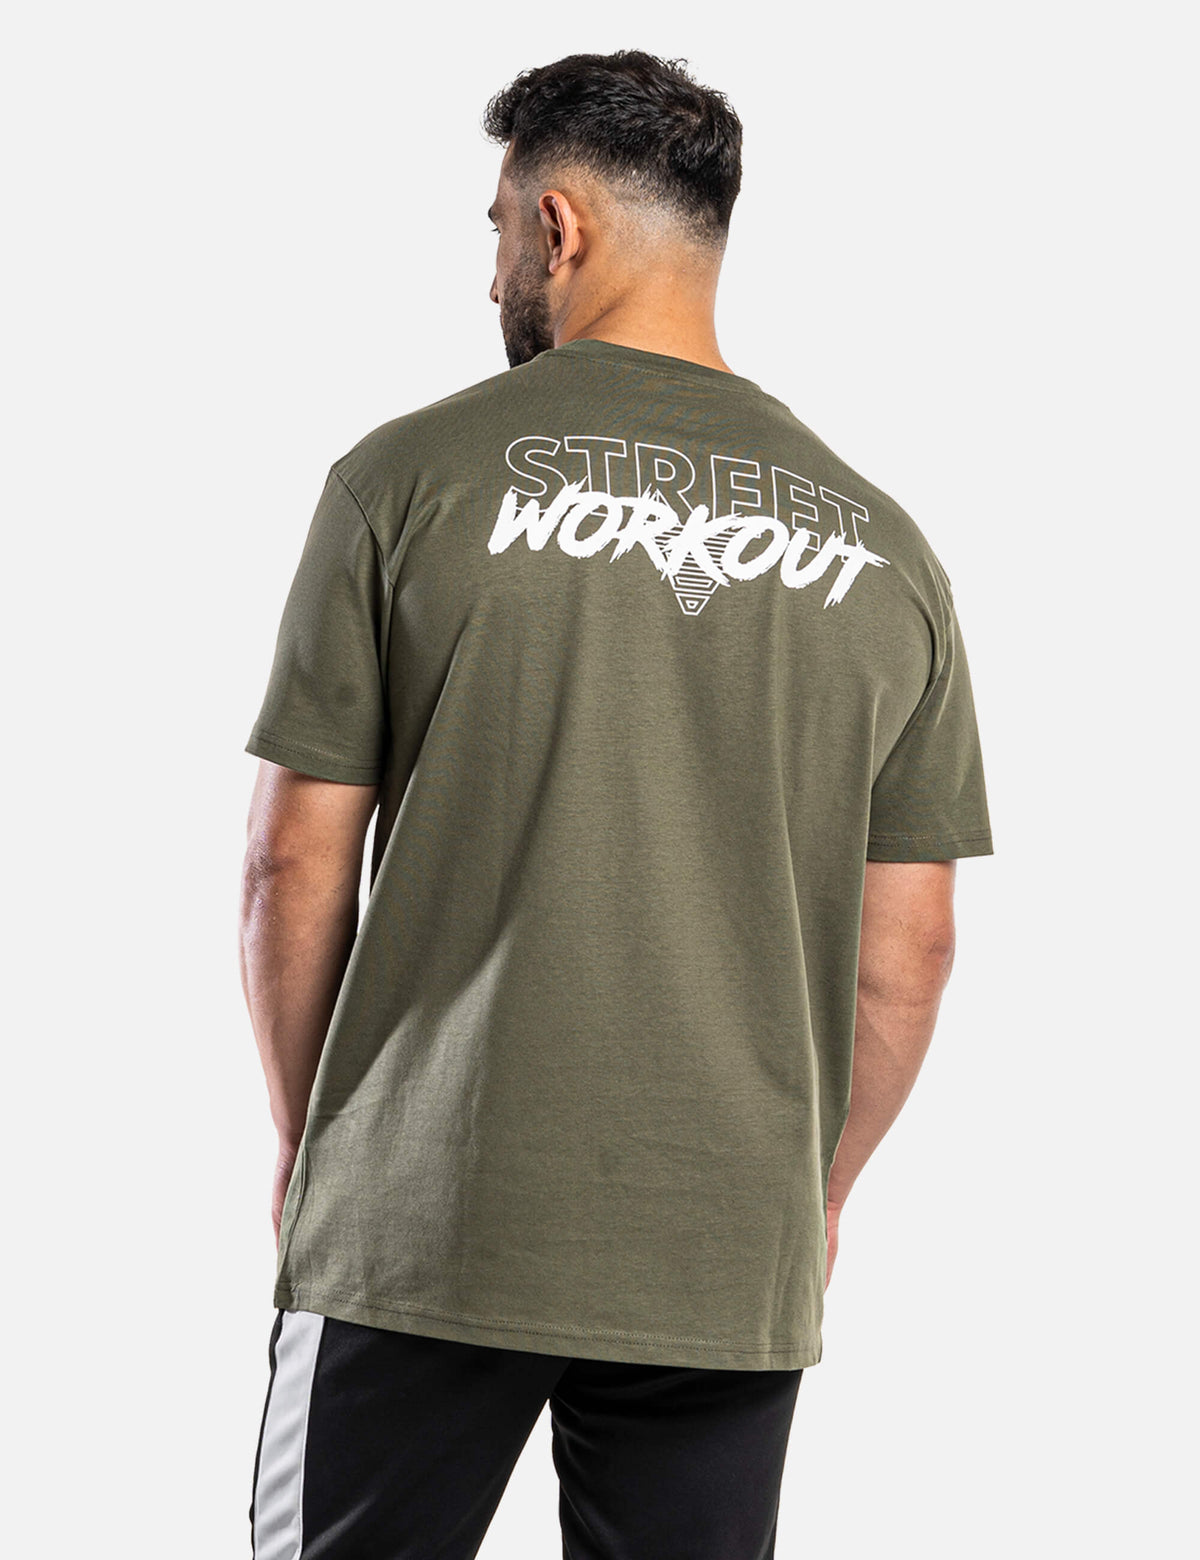 Squat University Vintage Varsity Fitness Gym Workout Active T-Shirt for  Sale by GrandeDuc